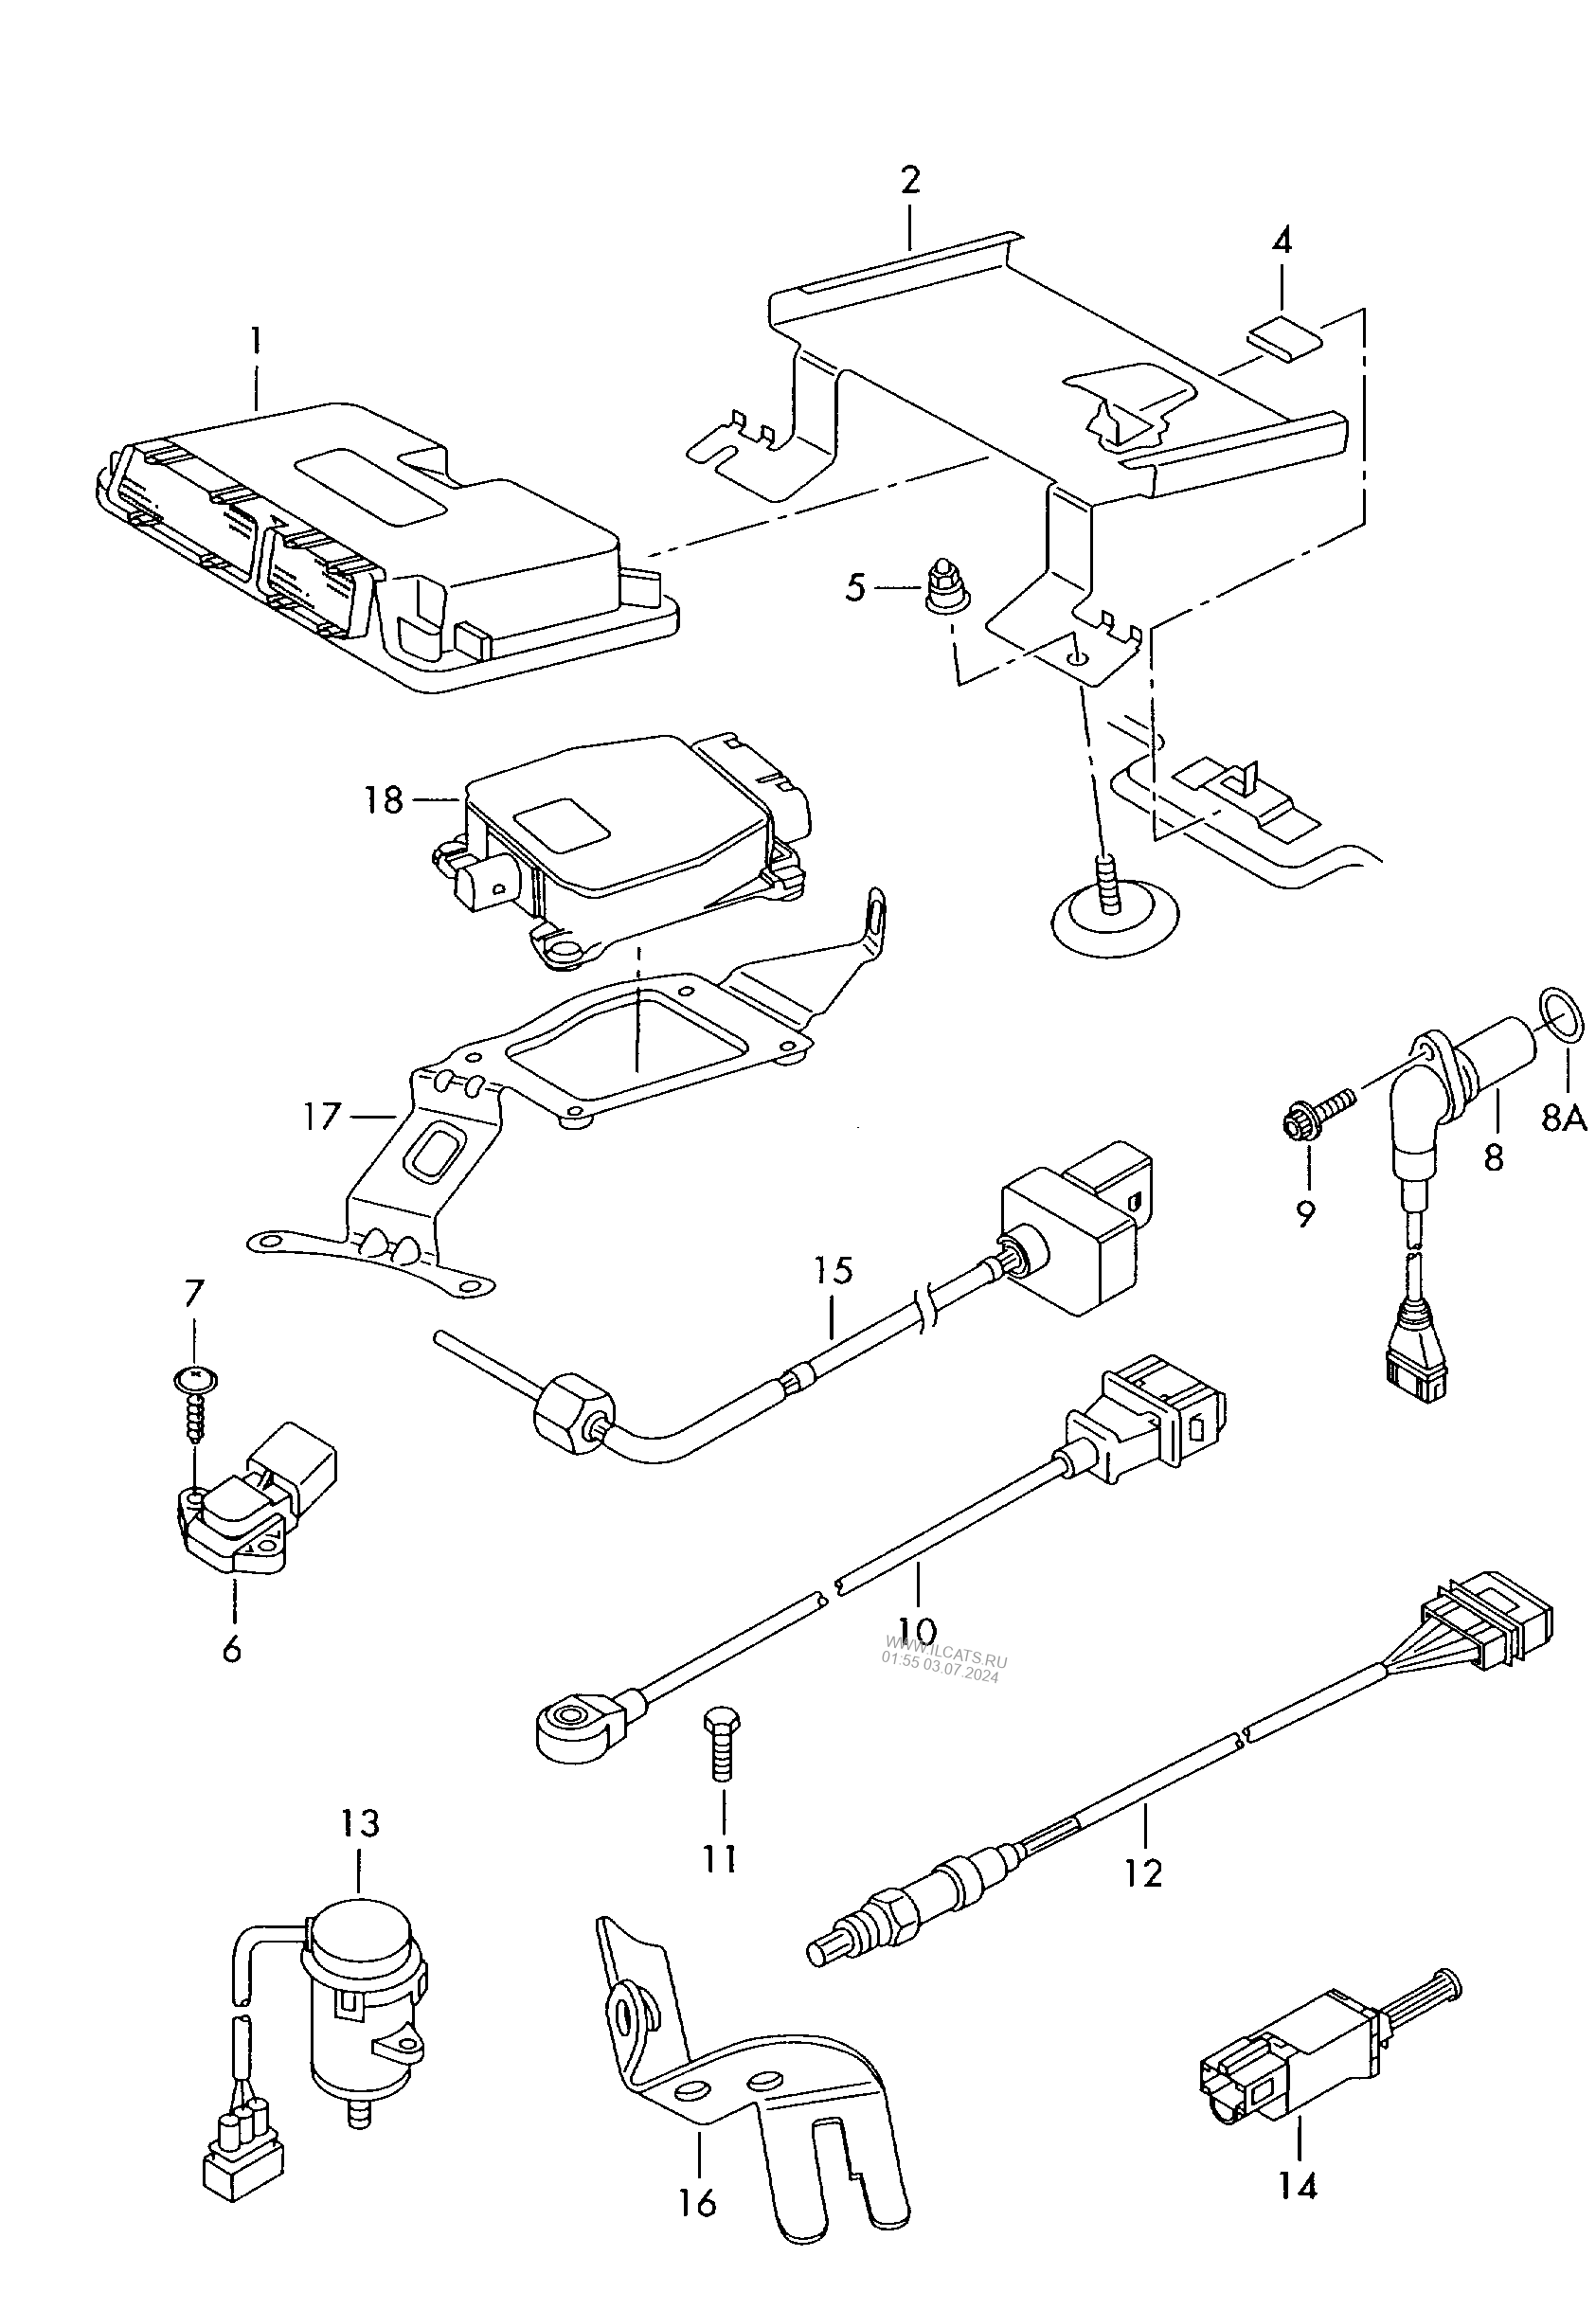 Apy Wiring Diagram Audi - Wiring Diagrams